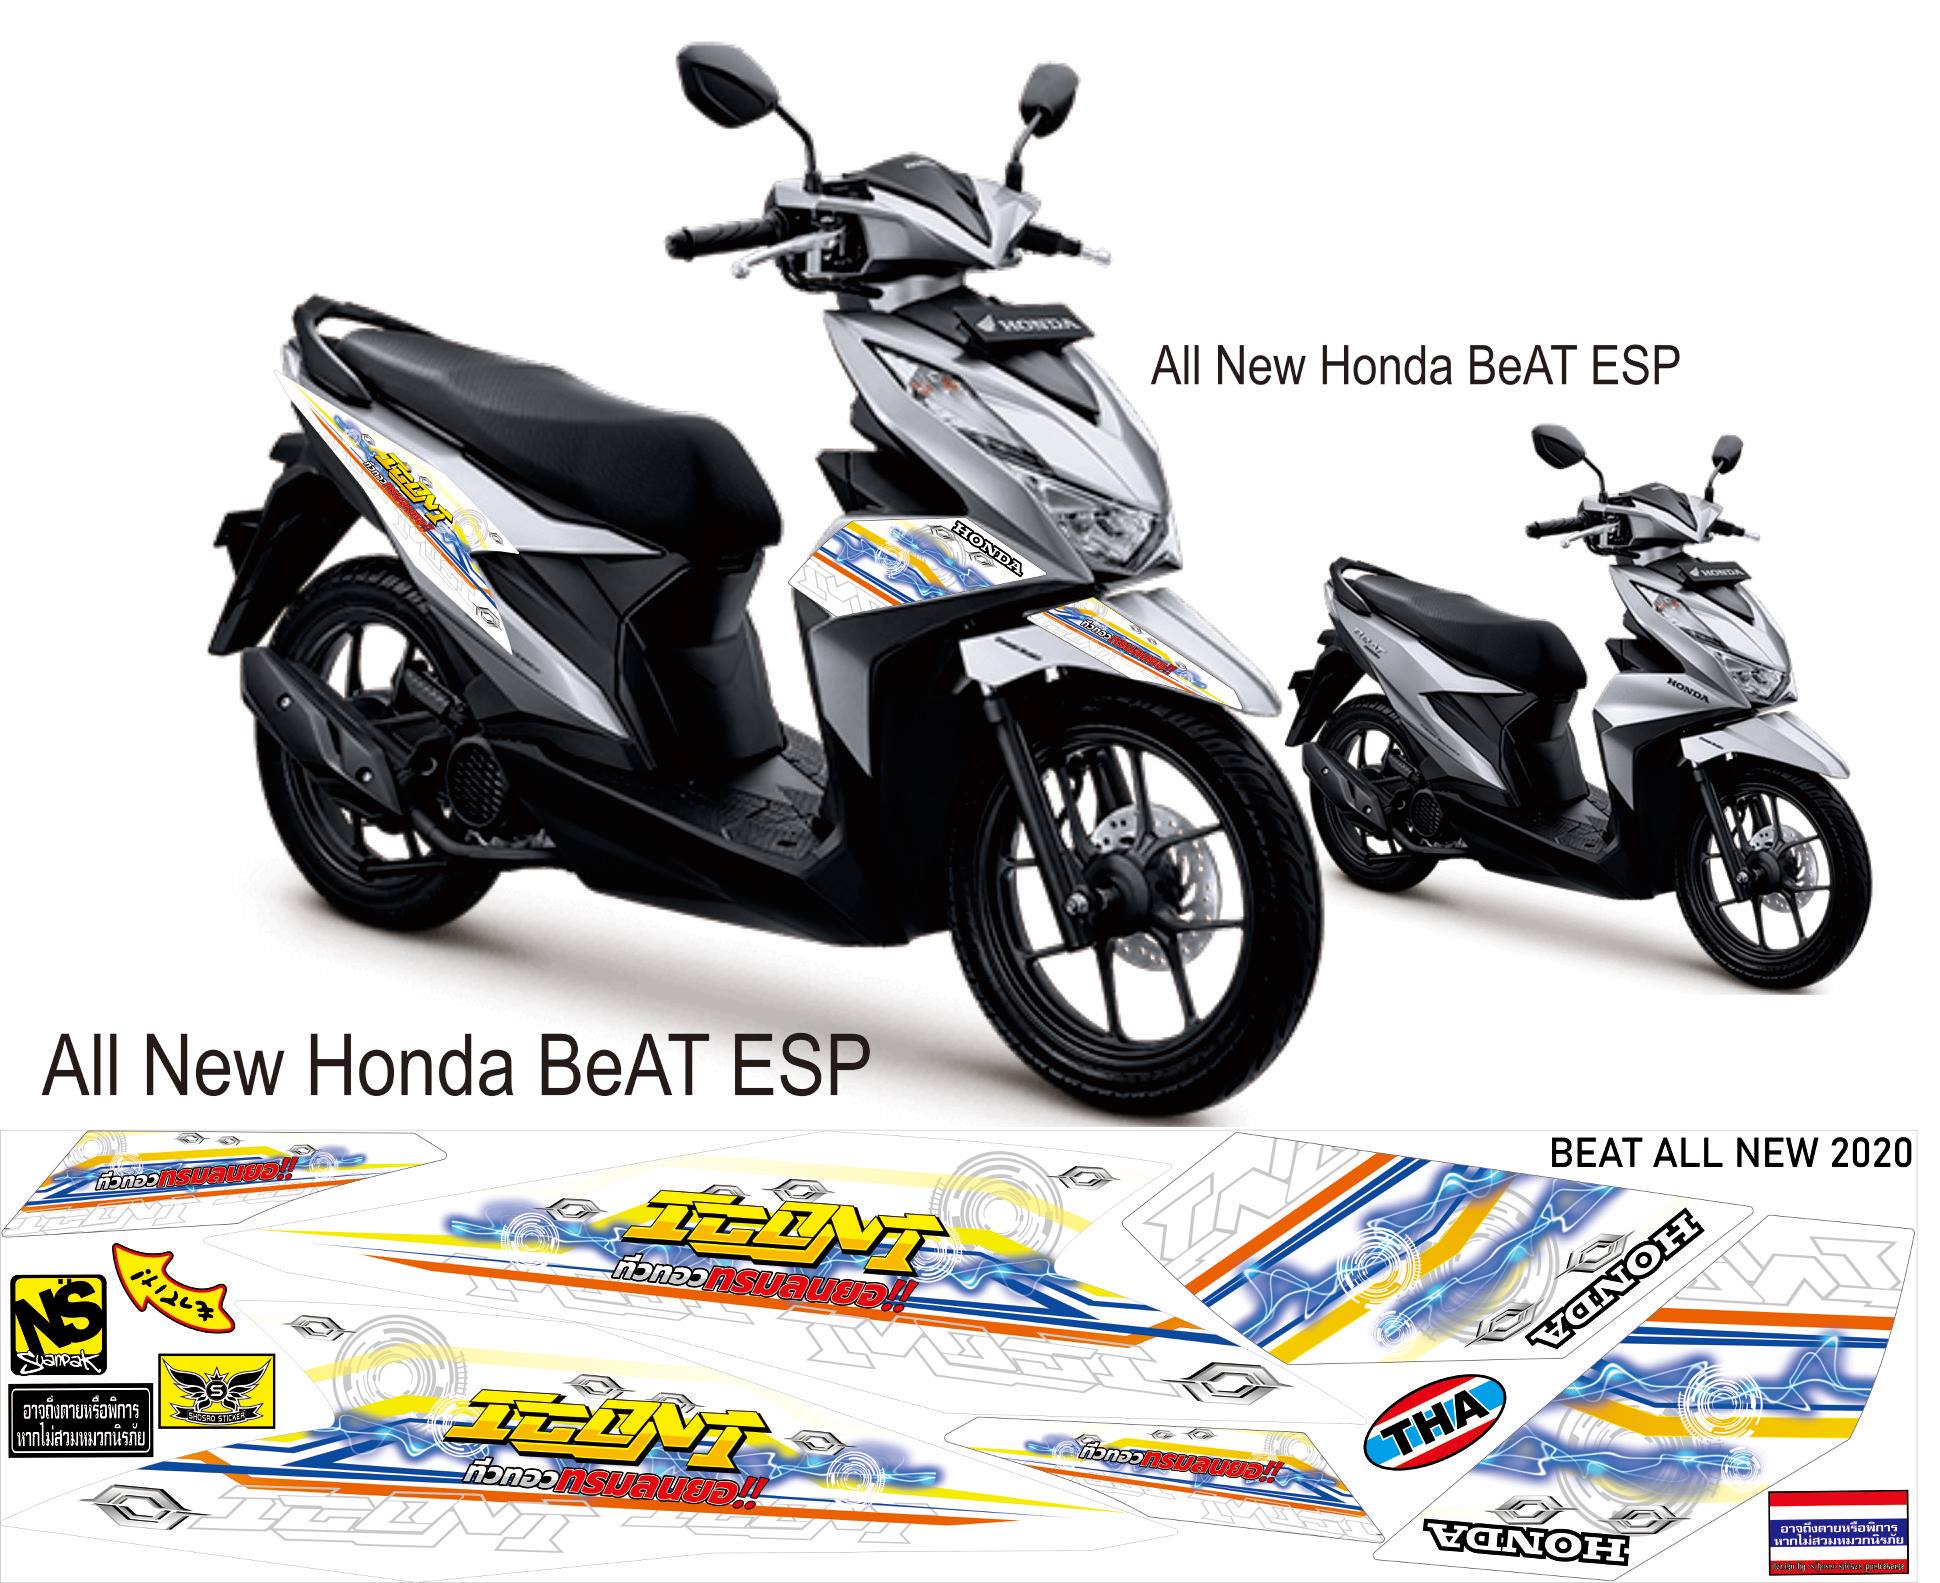 STRIPING VARIASI All New Honda BeAT ESP 2020 ICON THAILAND MOTHAI